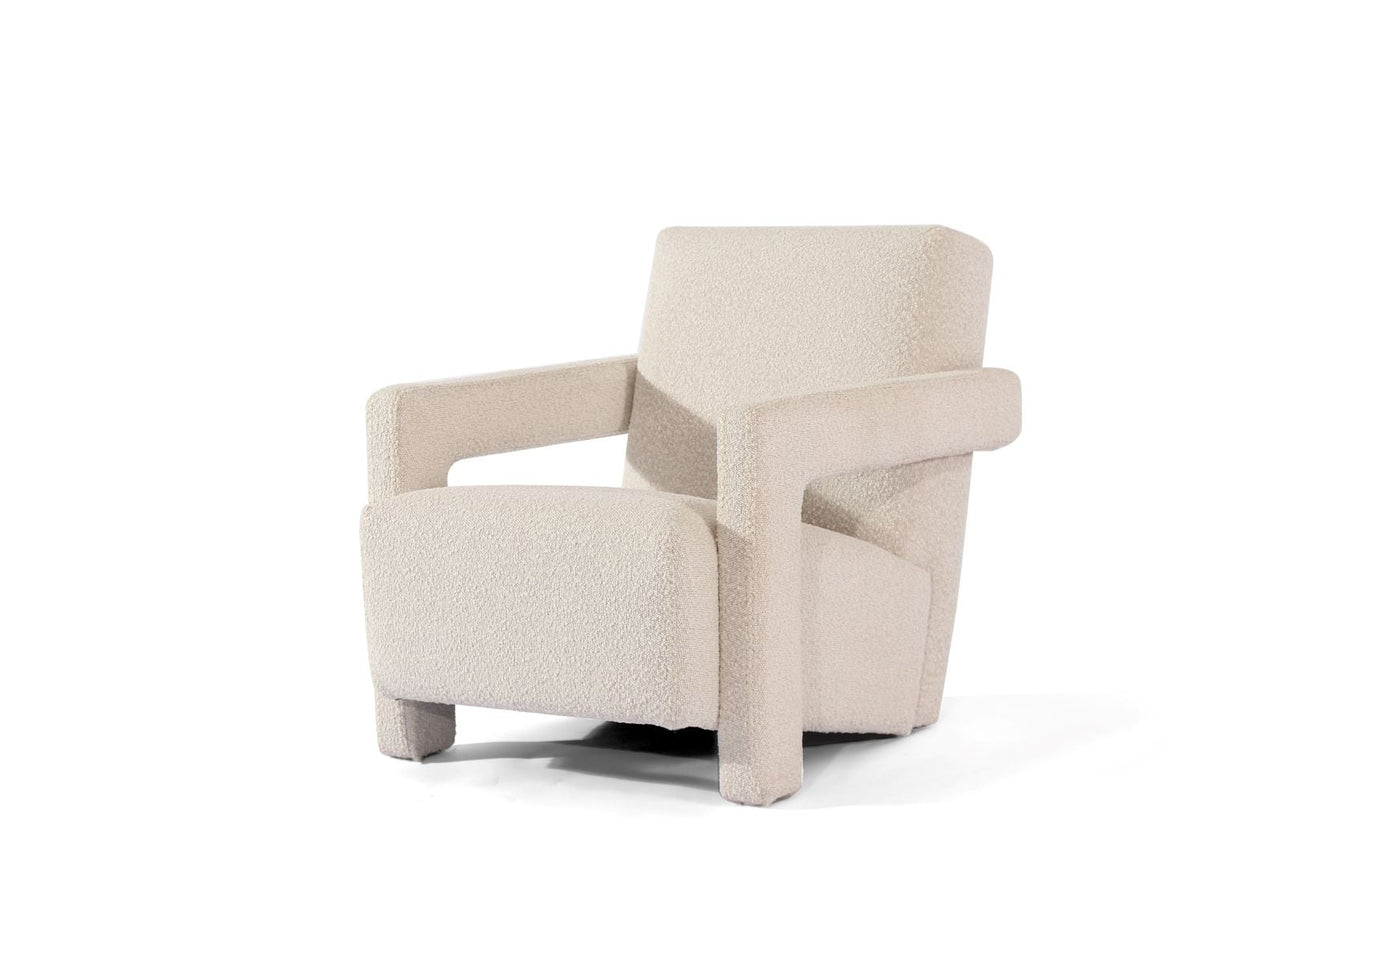 Utrecht armchair - Retro Modern Designs